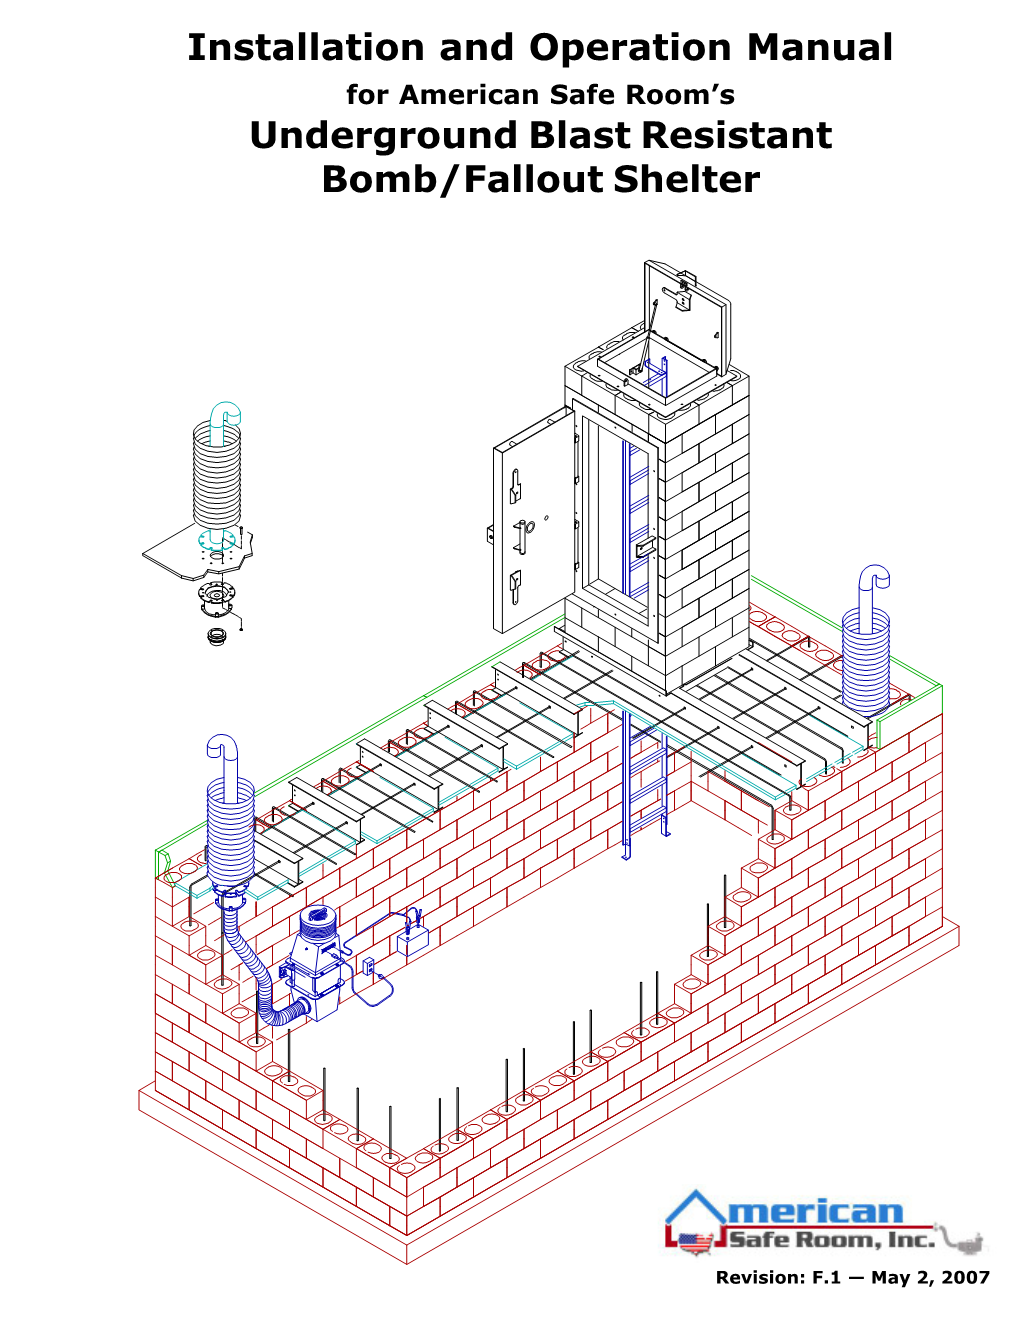 Installation and Operation Manual Underground Blast Resistant Bomb